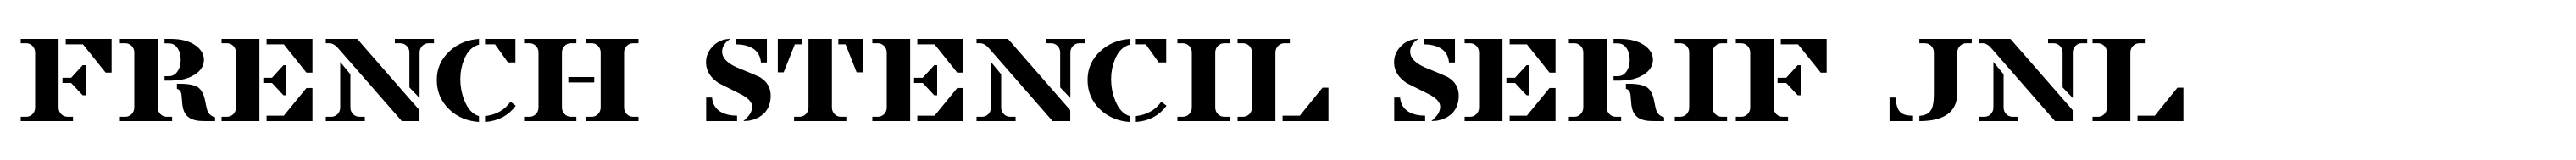 French Stencil Serif JNL